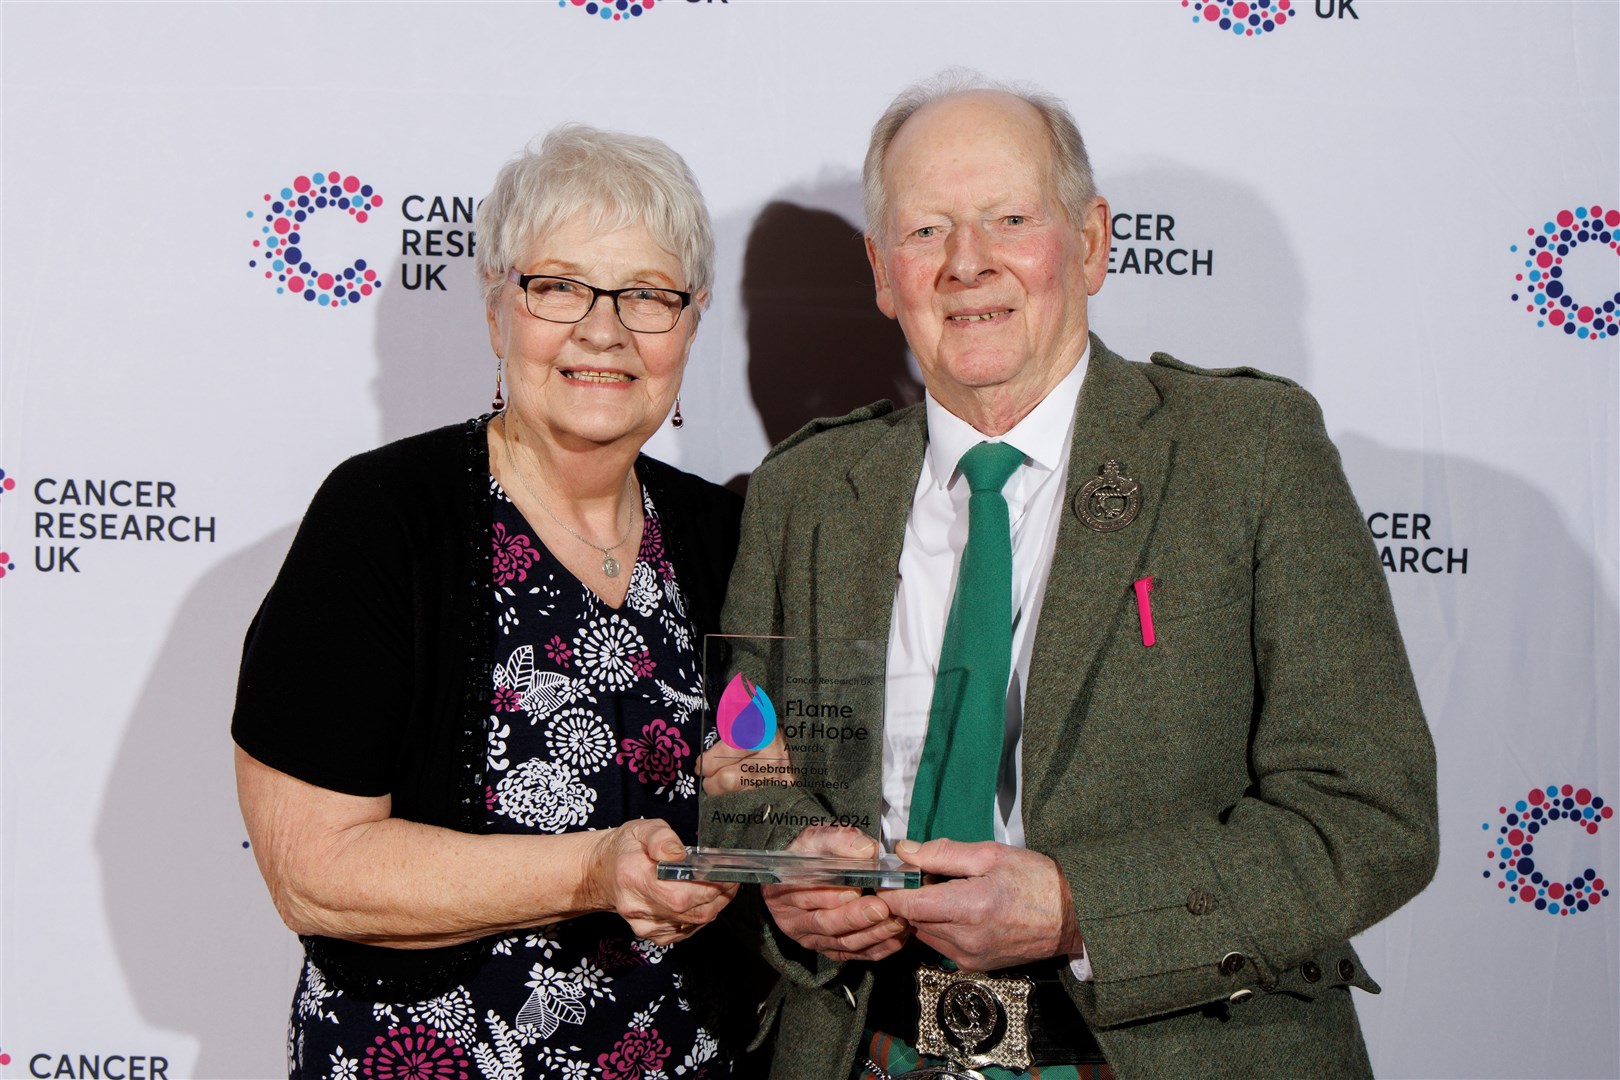 Sheena Wallace and John Mackintosh received awards at an event in Edinburgh.